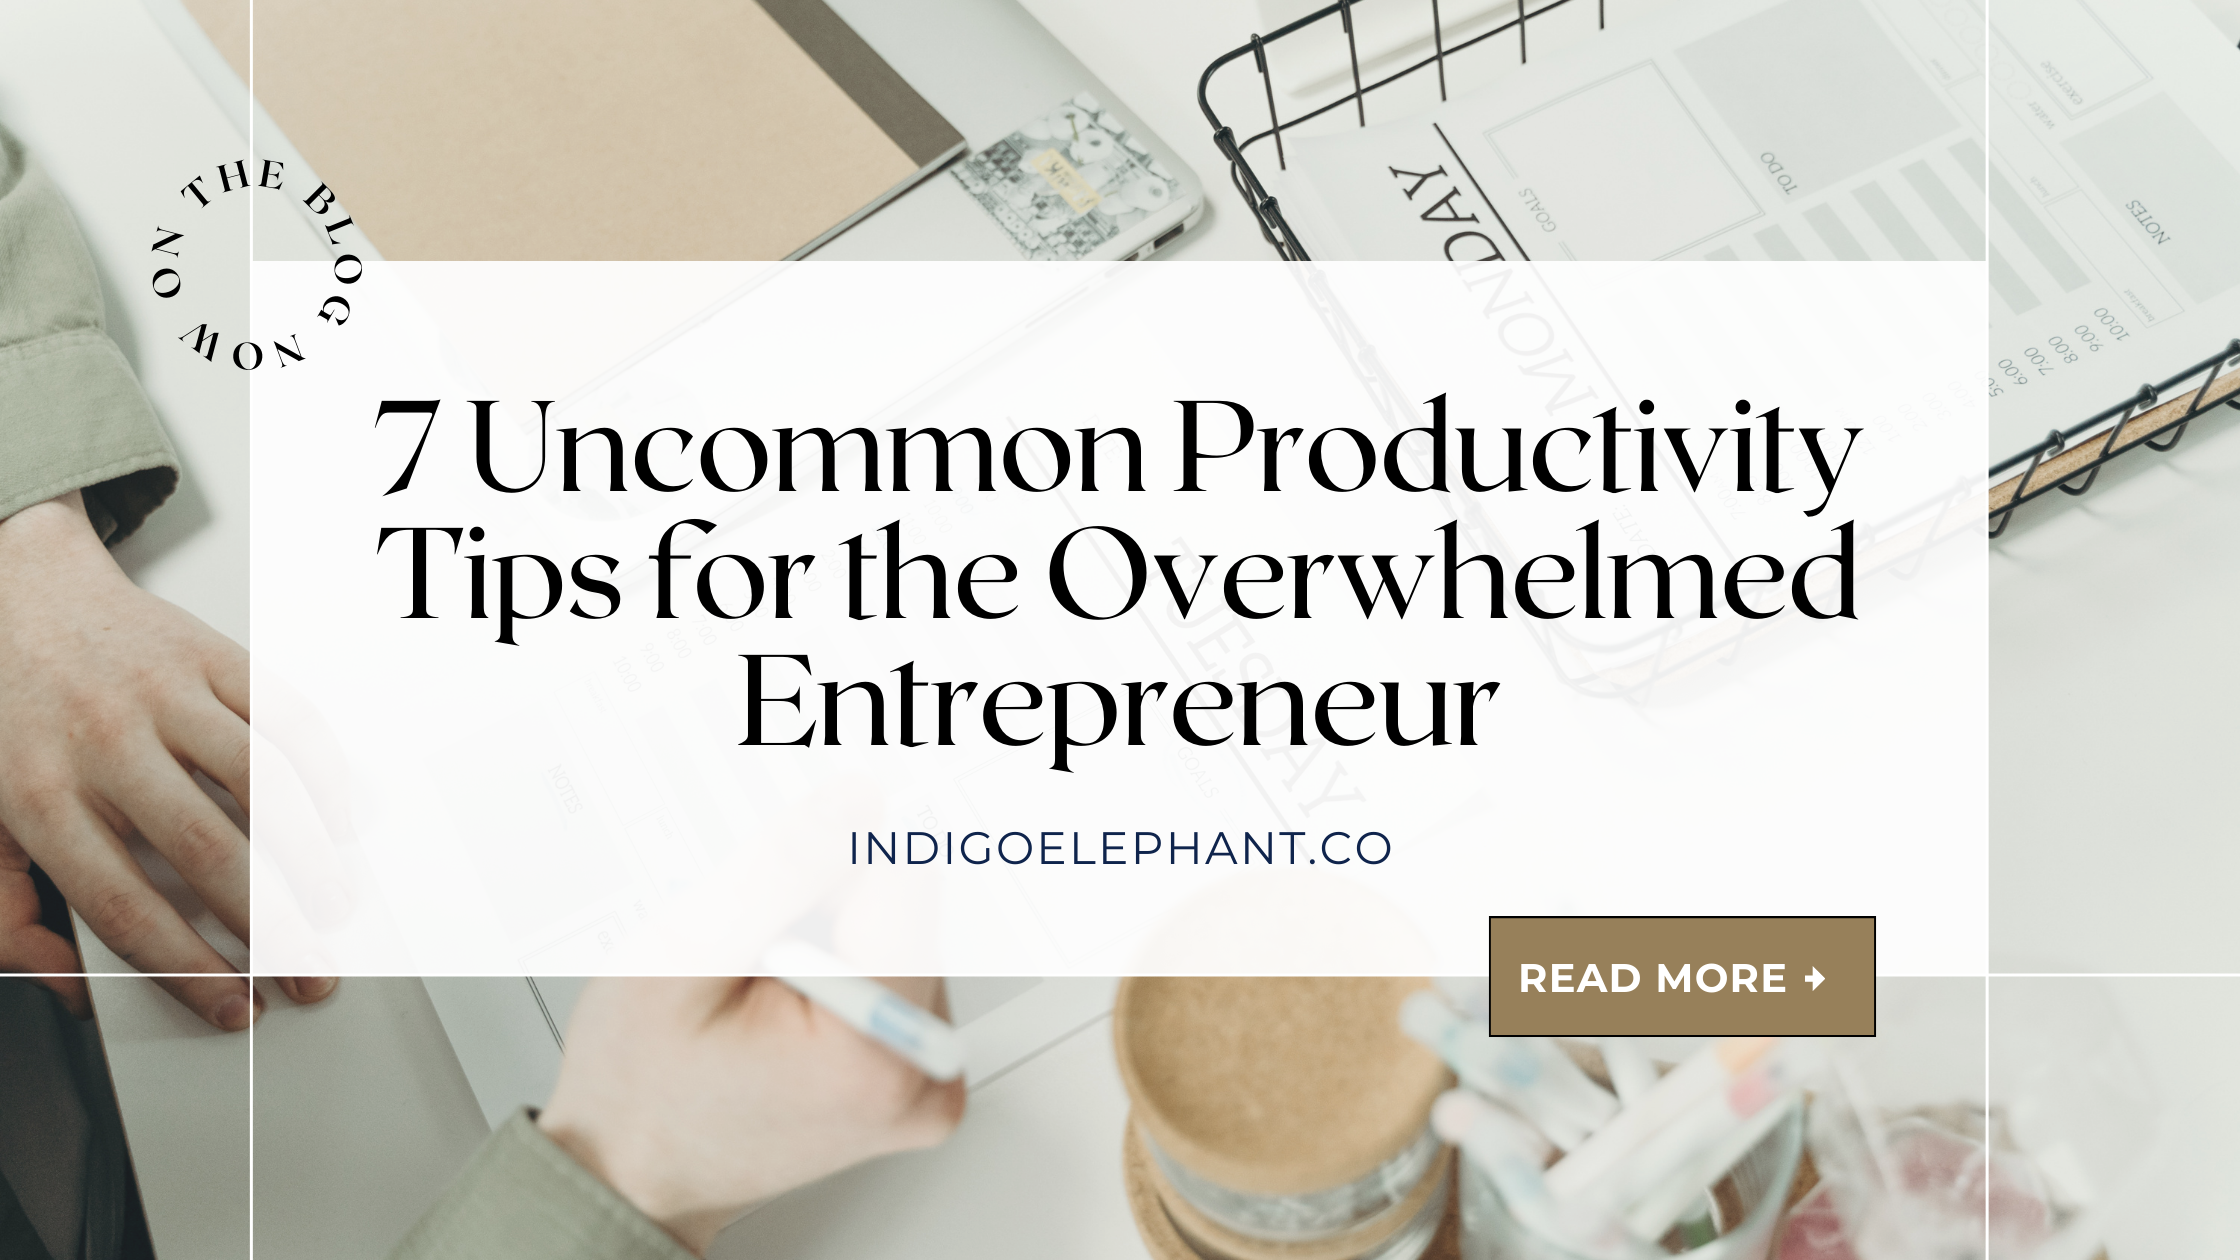 7 Uncommon Productivity Tips for the Overwhelmed Entrepreneur